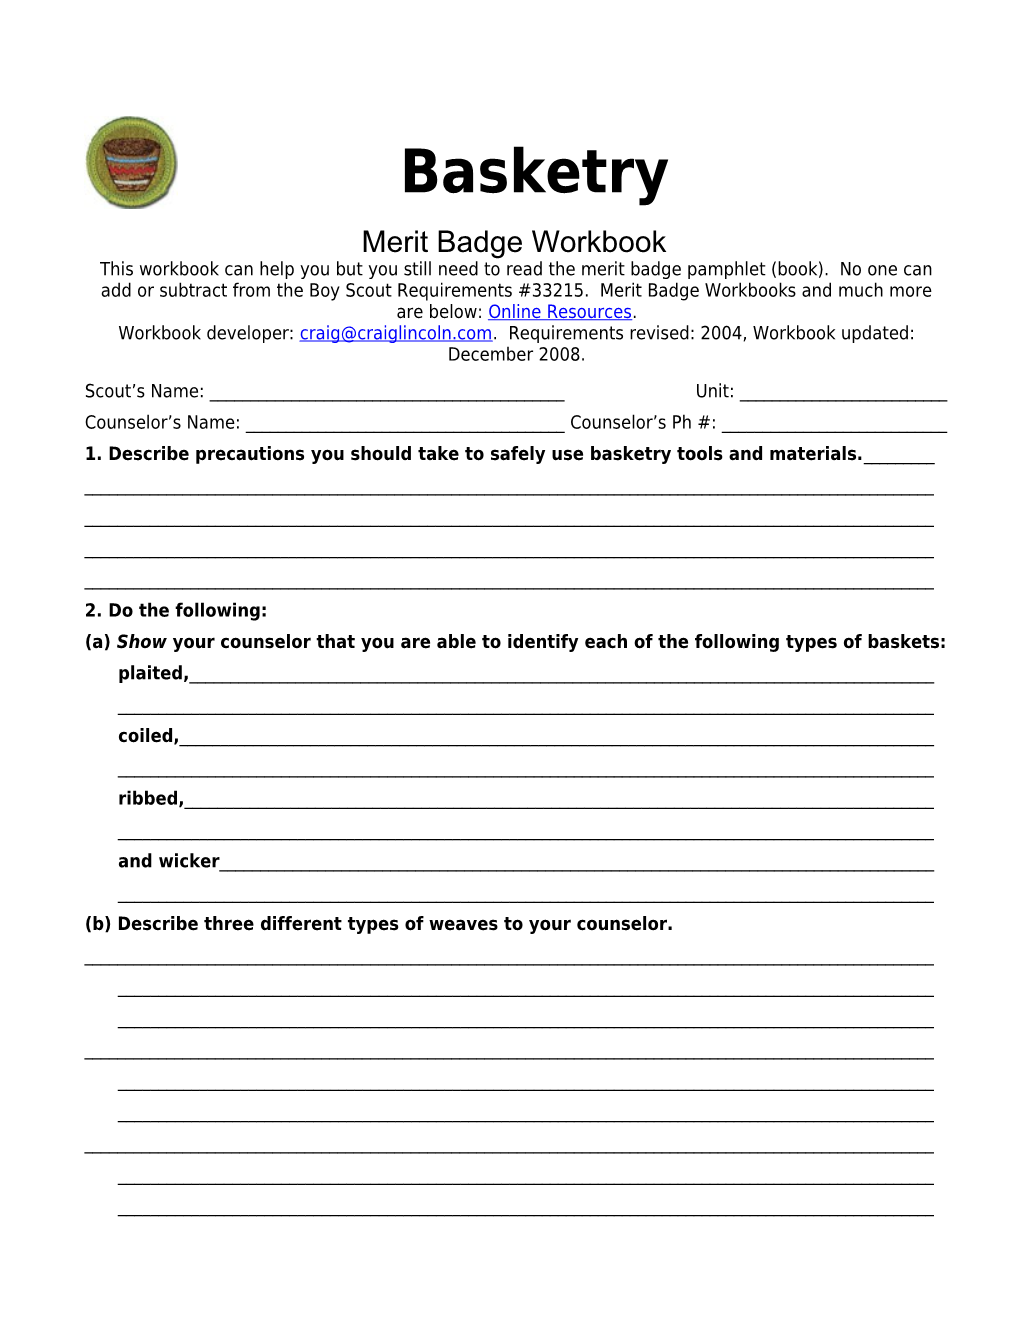 Basketry P. 1 Merit Badge Workbook Scout's Name: ______